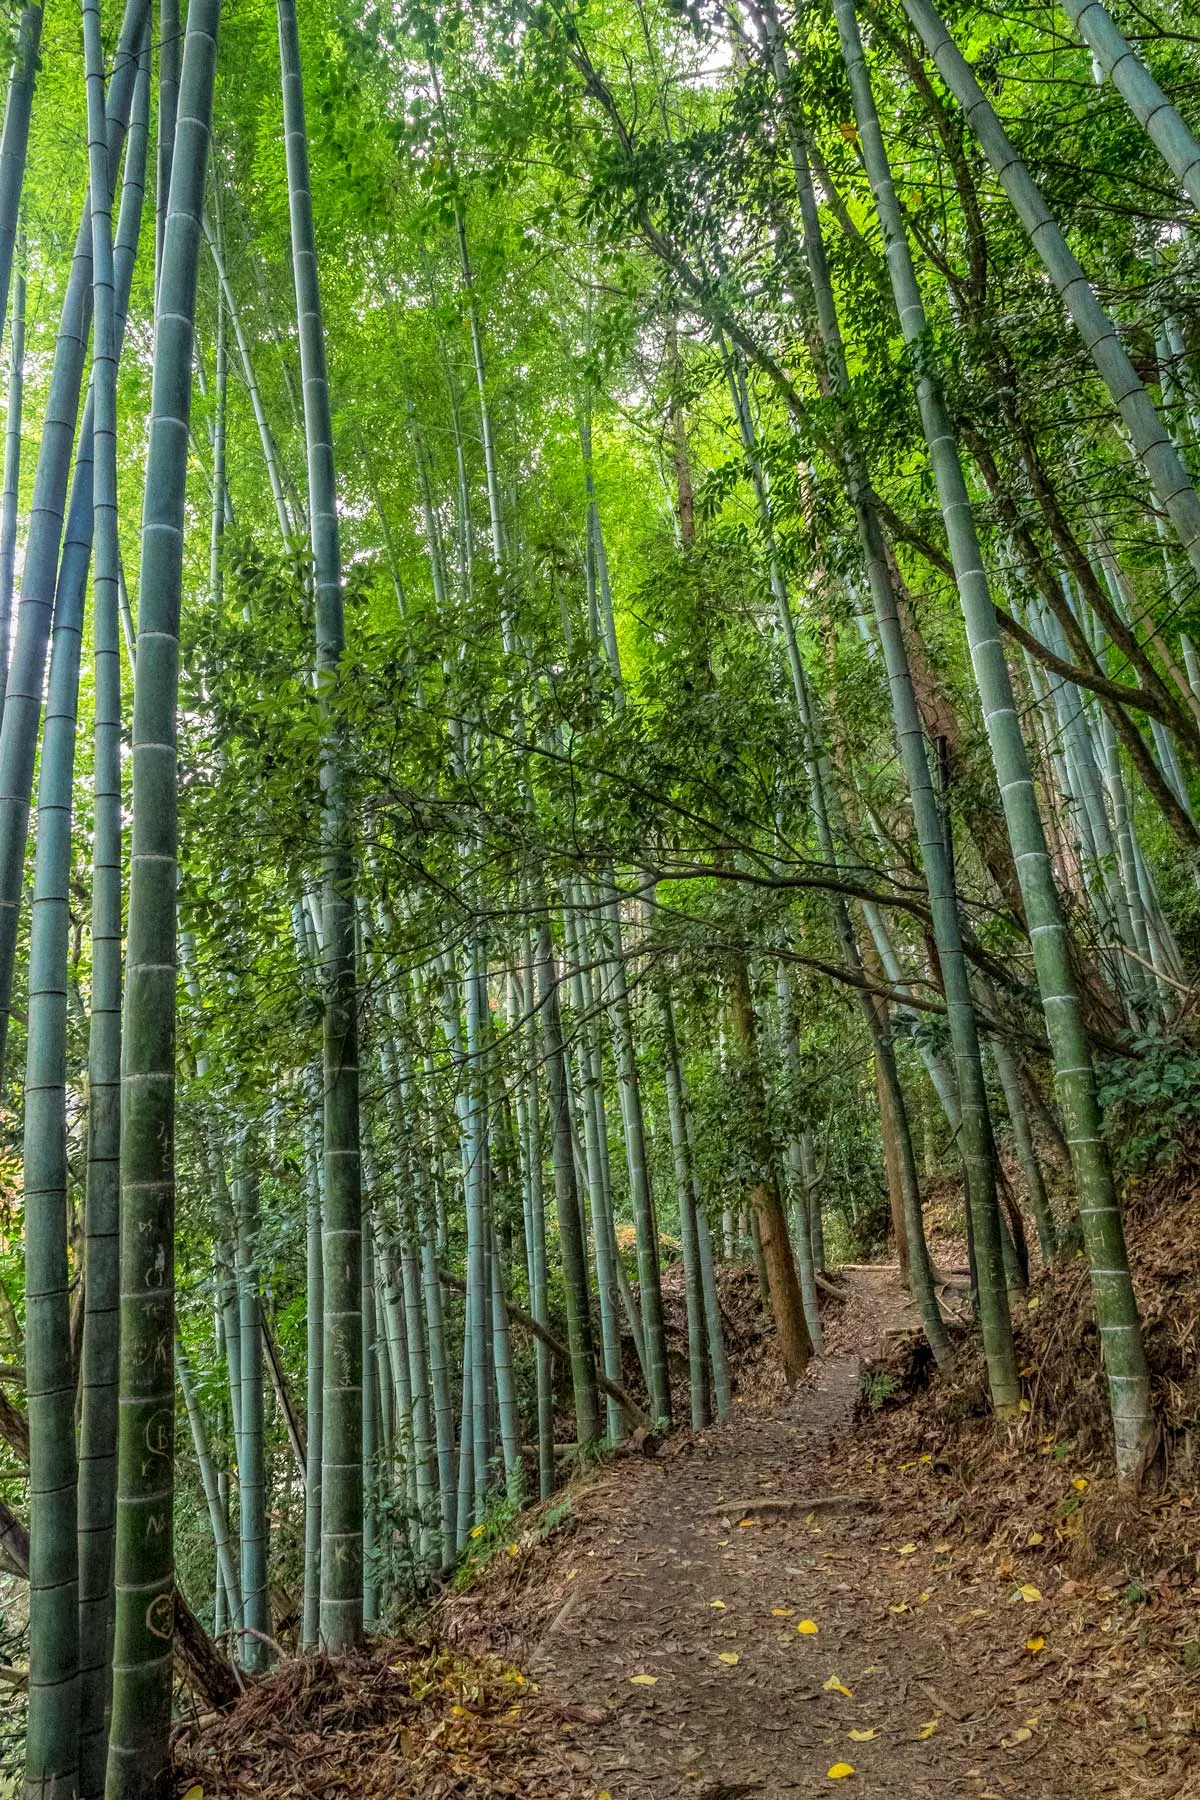 Bamboo grove at Fushimi Inari